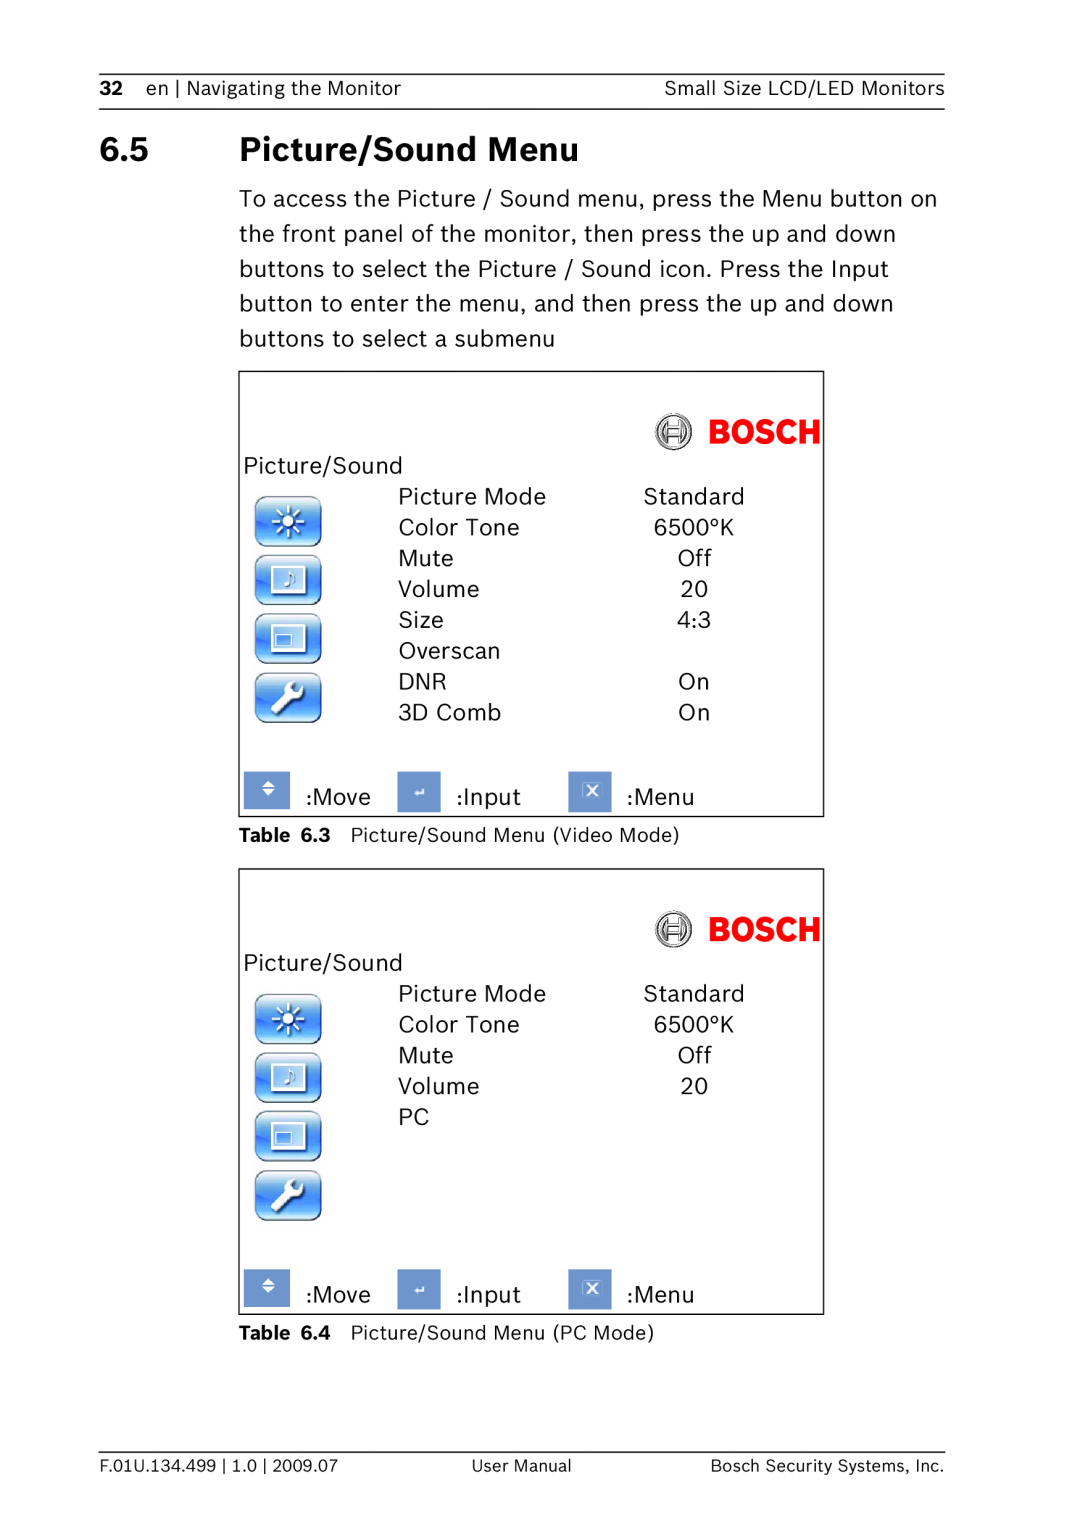 Bosch Appliances UML-102-90, UML-100-90, UML-080-90, UML-082-90 user manual Picture/Sound Menu 